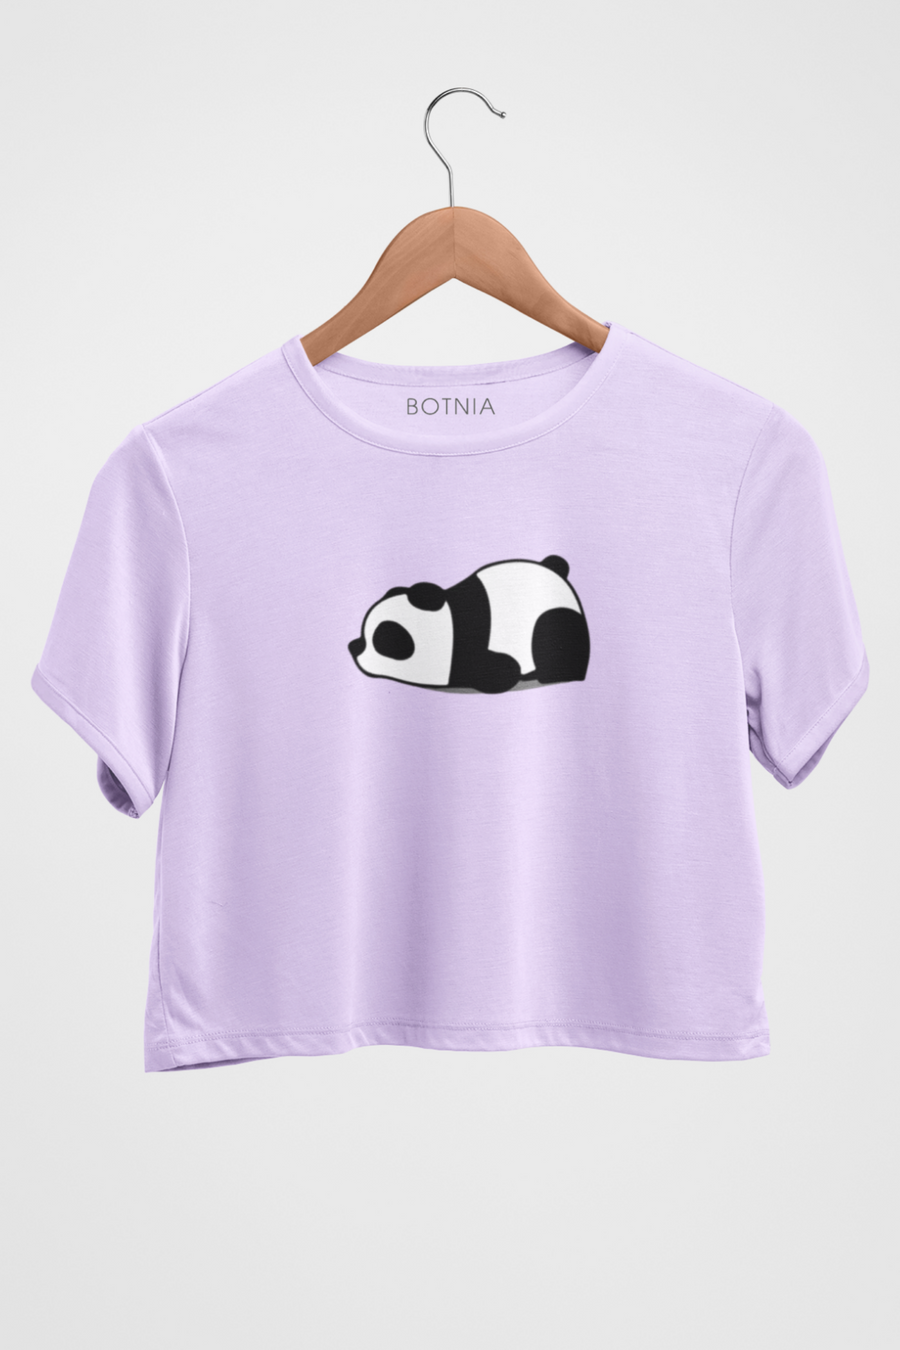 Panda -Crop Top - Botnia